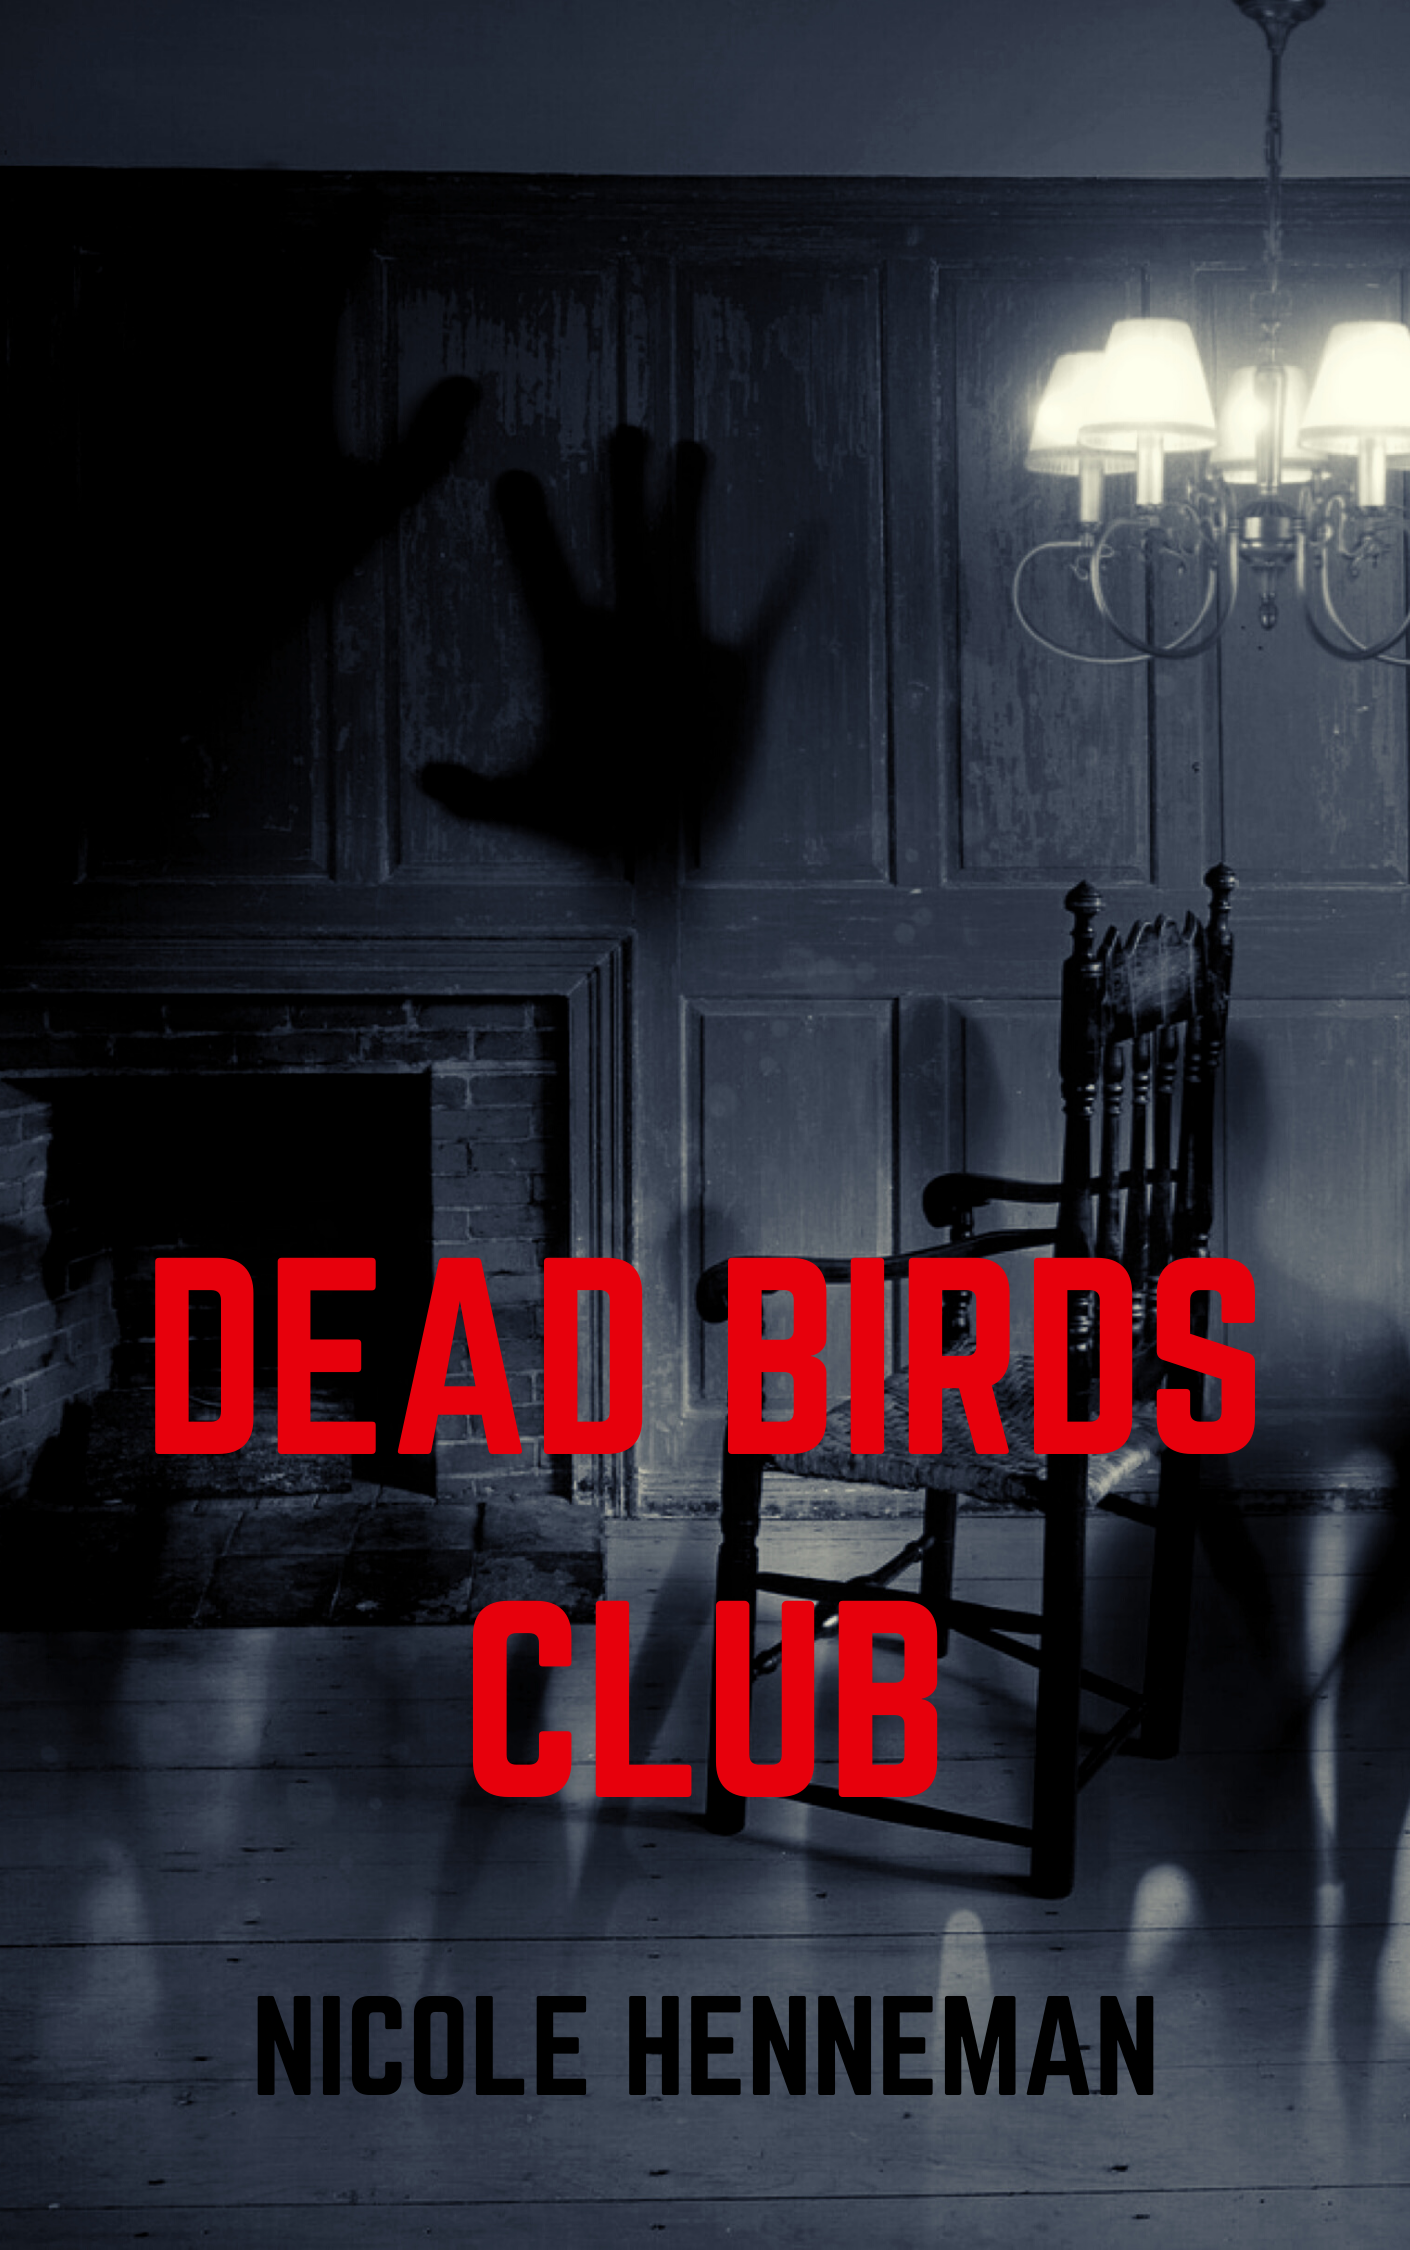 Dead Birds club